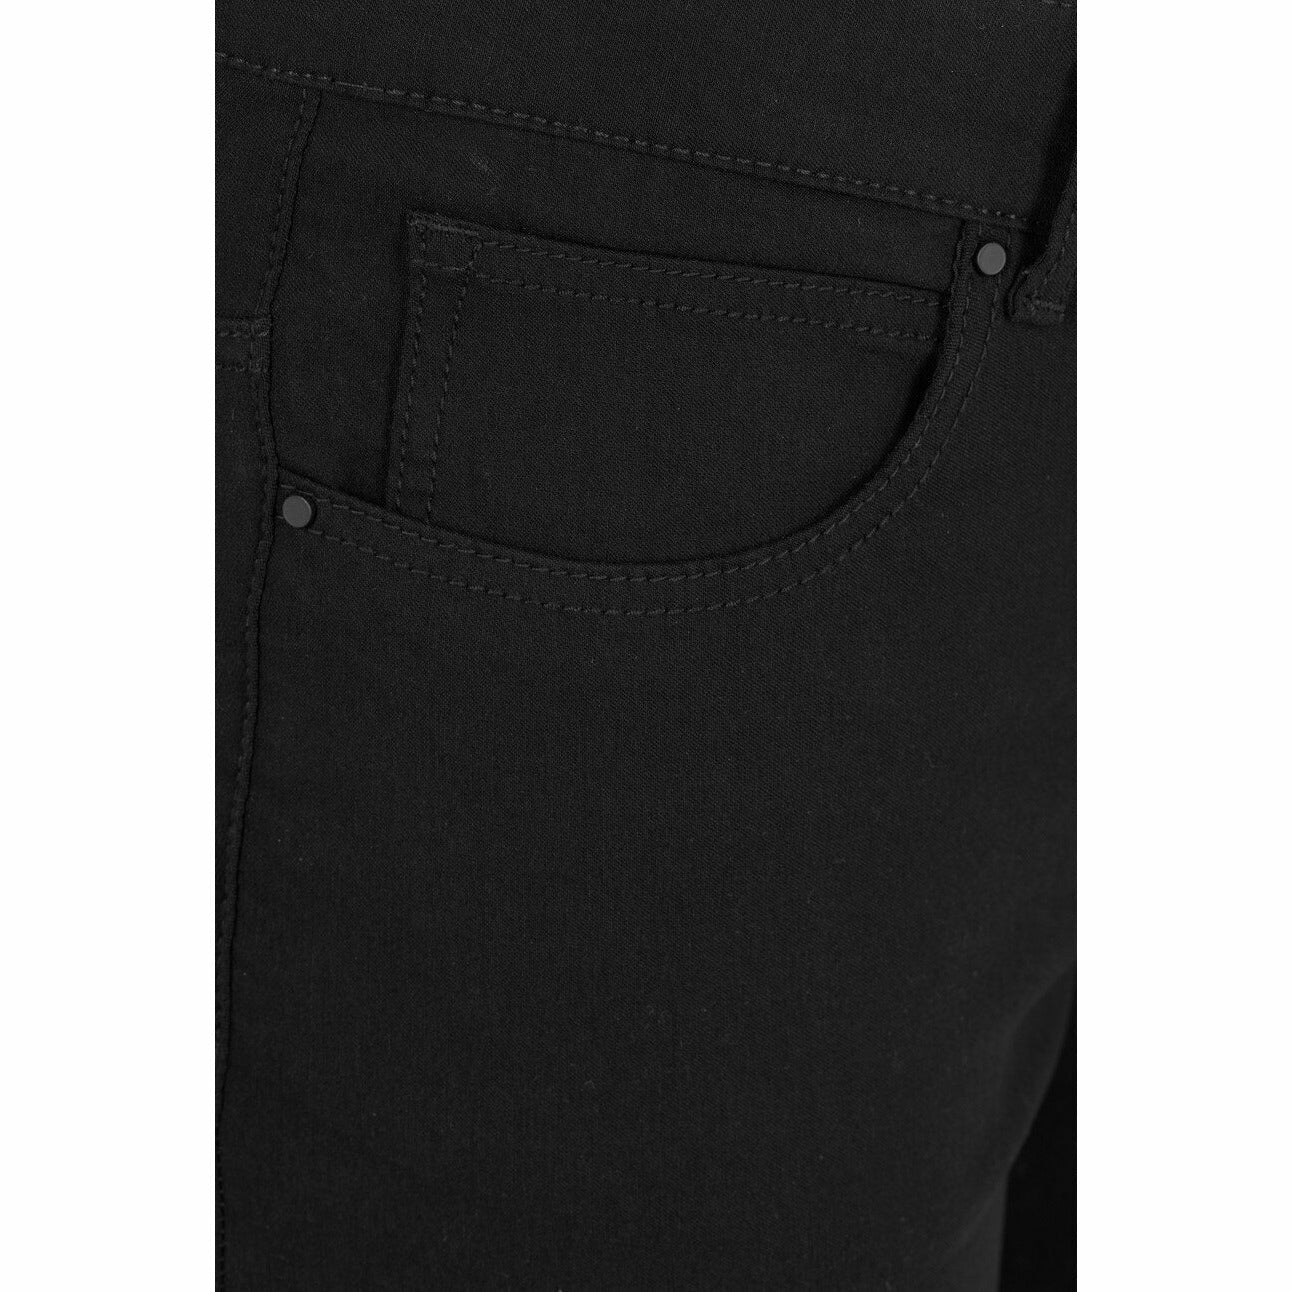 Zizzi Super Stretch Jeans in Black - Wardrobe Plus